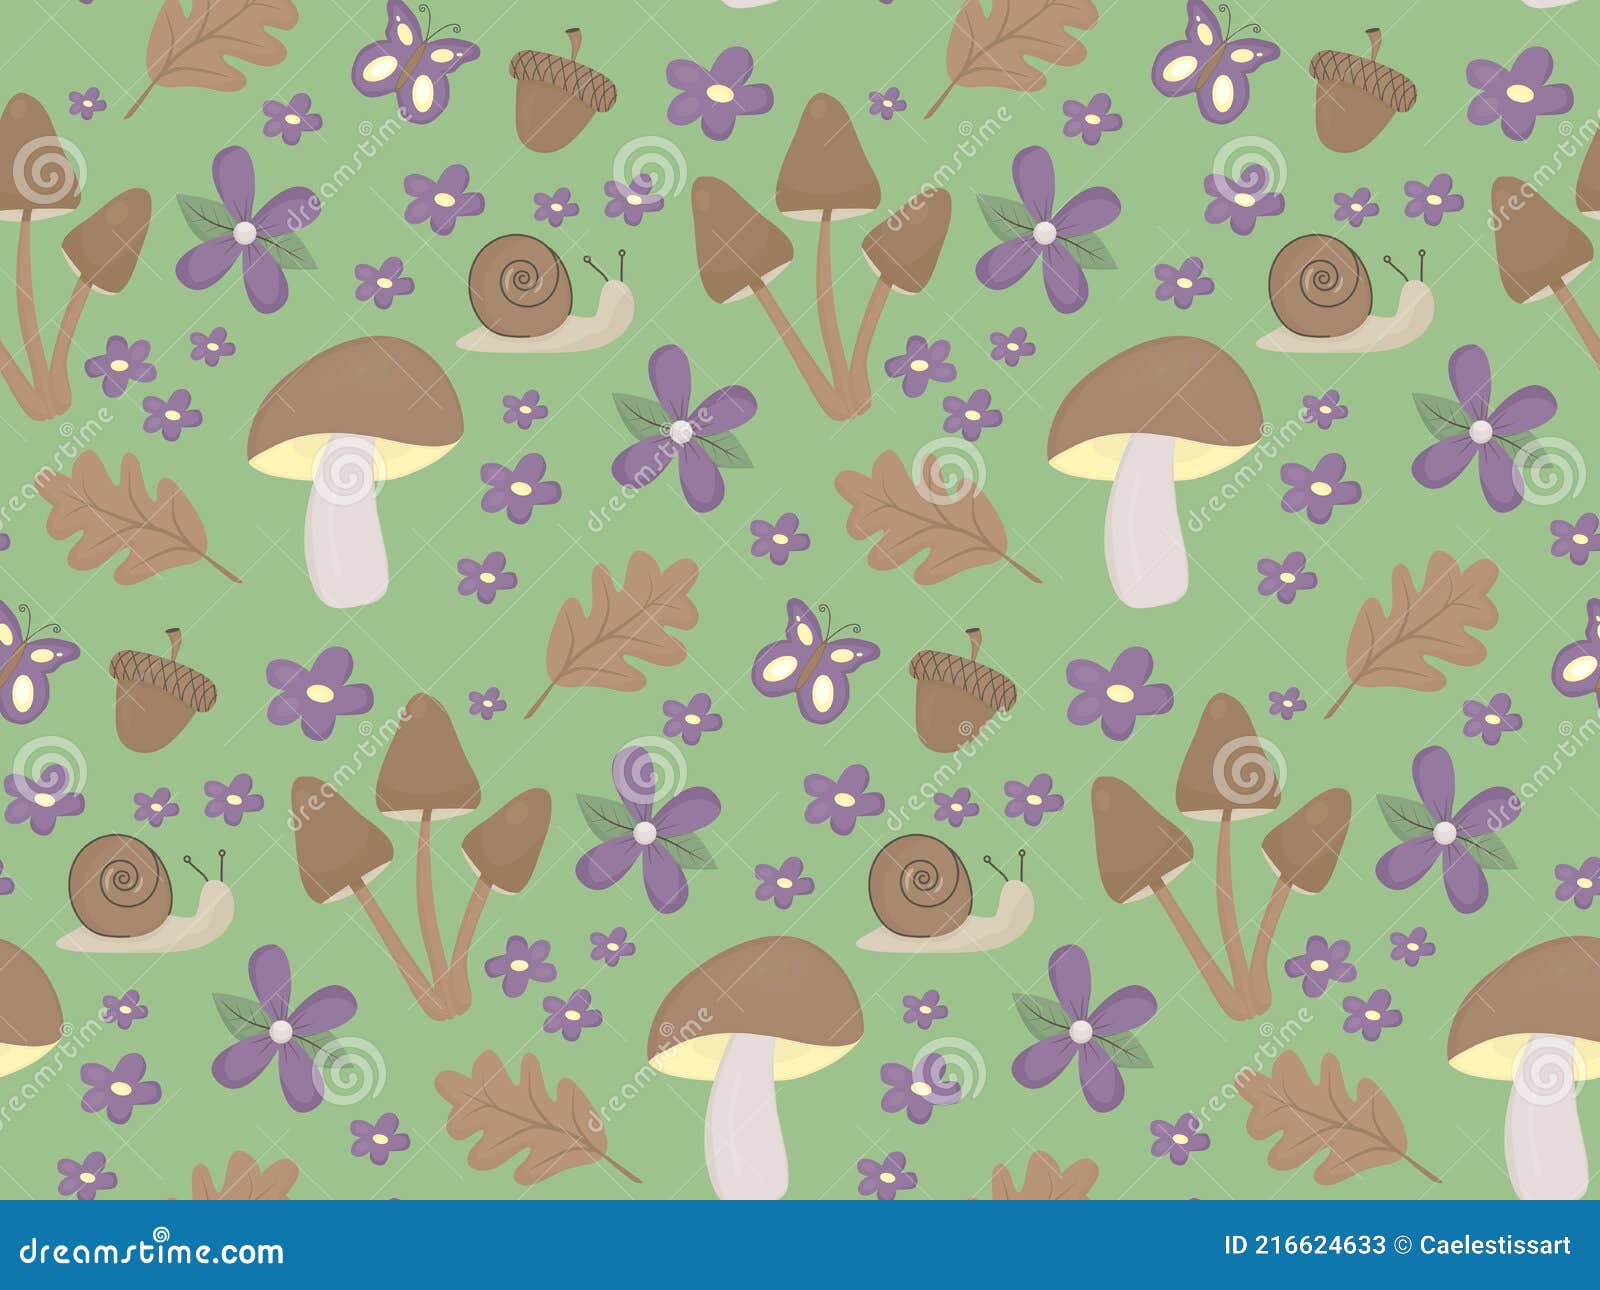 Aesthetic Mushroom 1 wallpaper by AxOloTl4286  Download on ZEDGE  440f